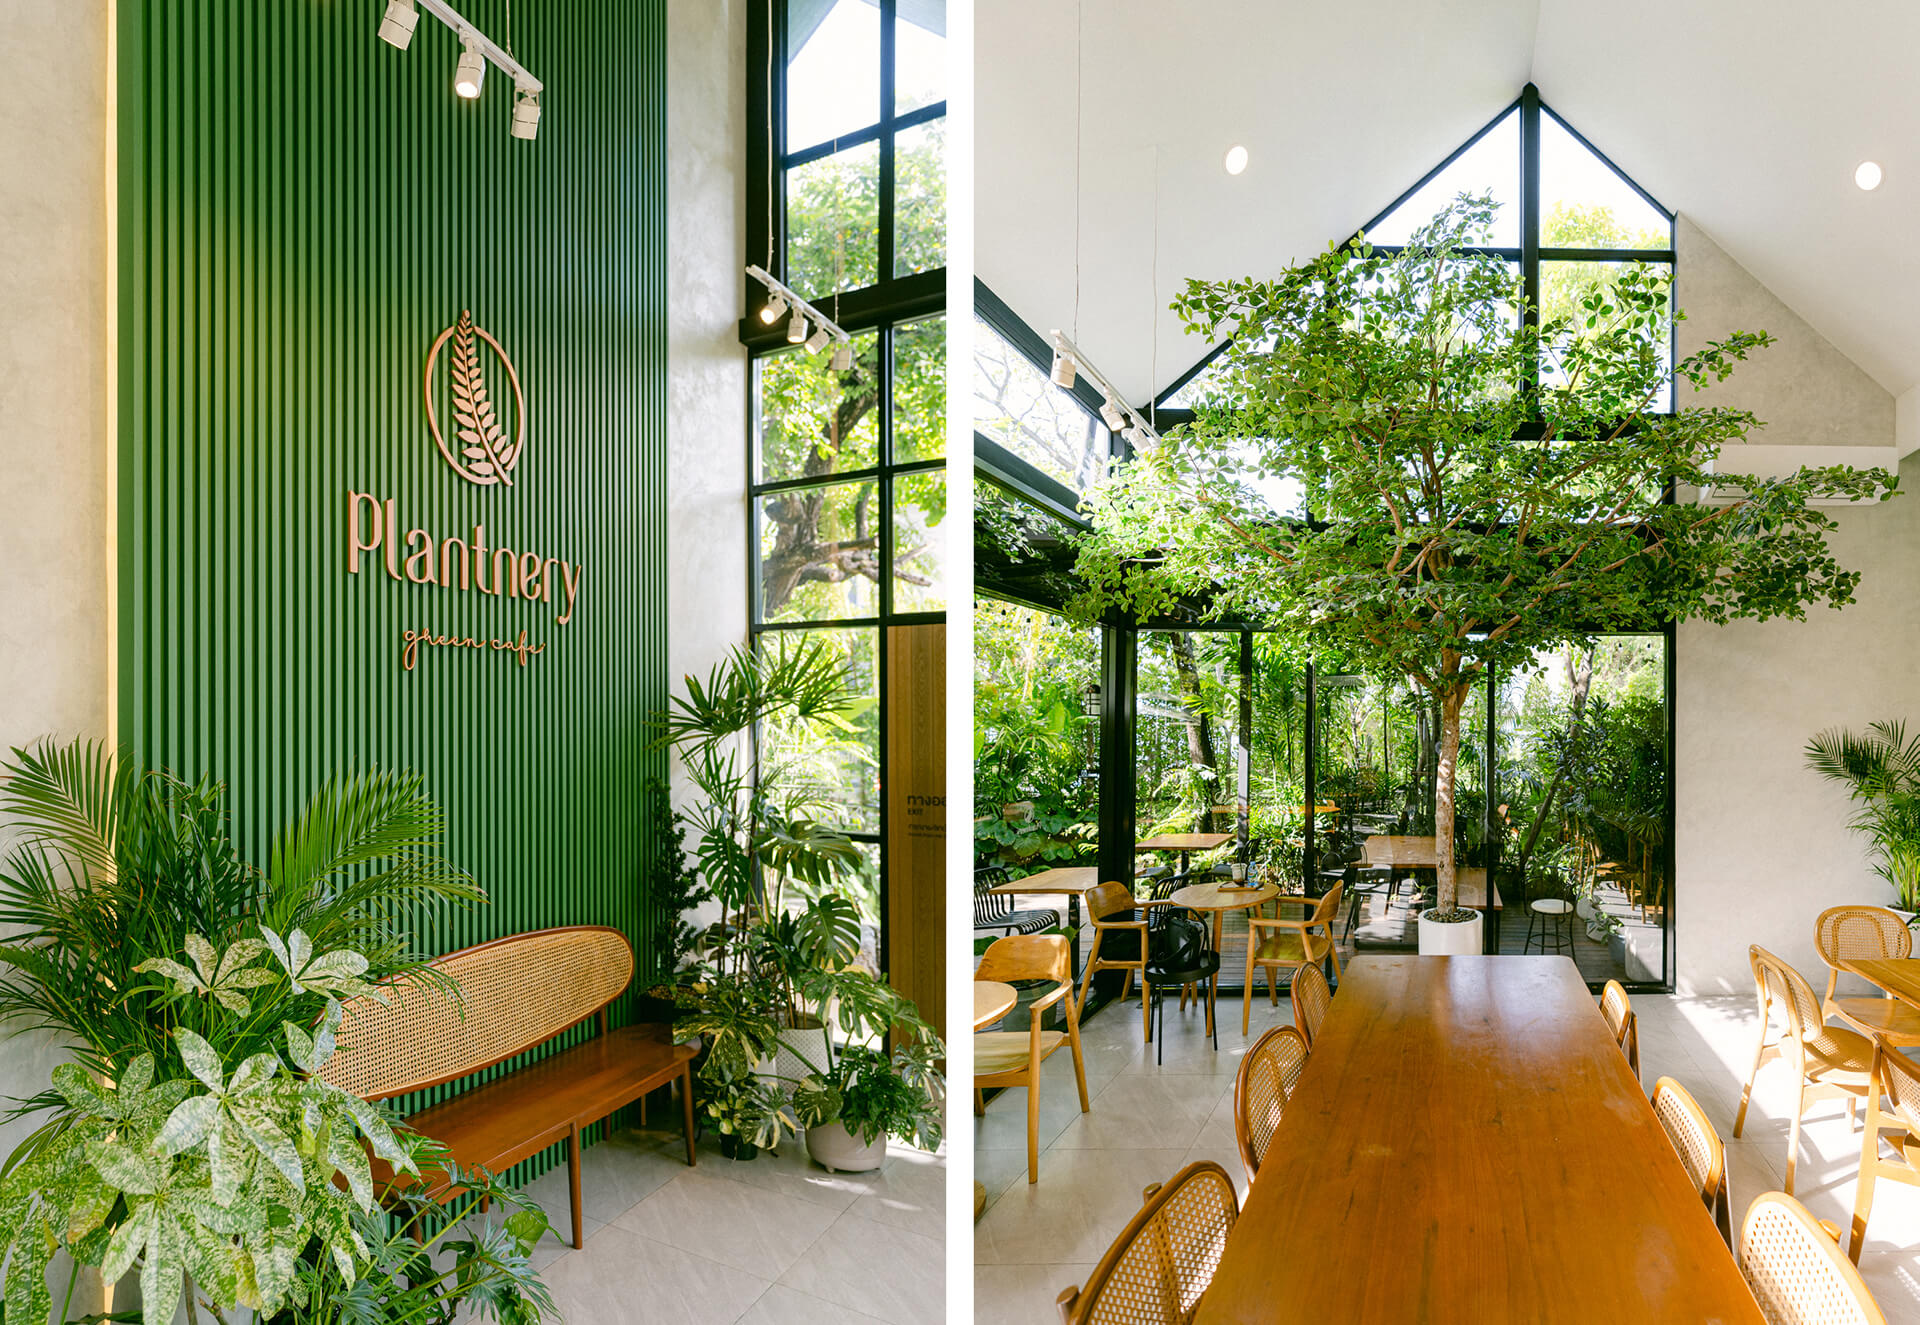 plantnery green café